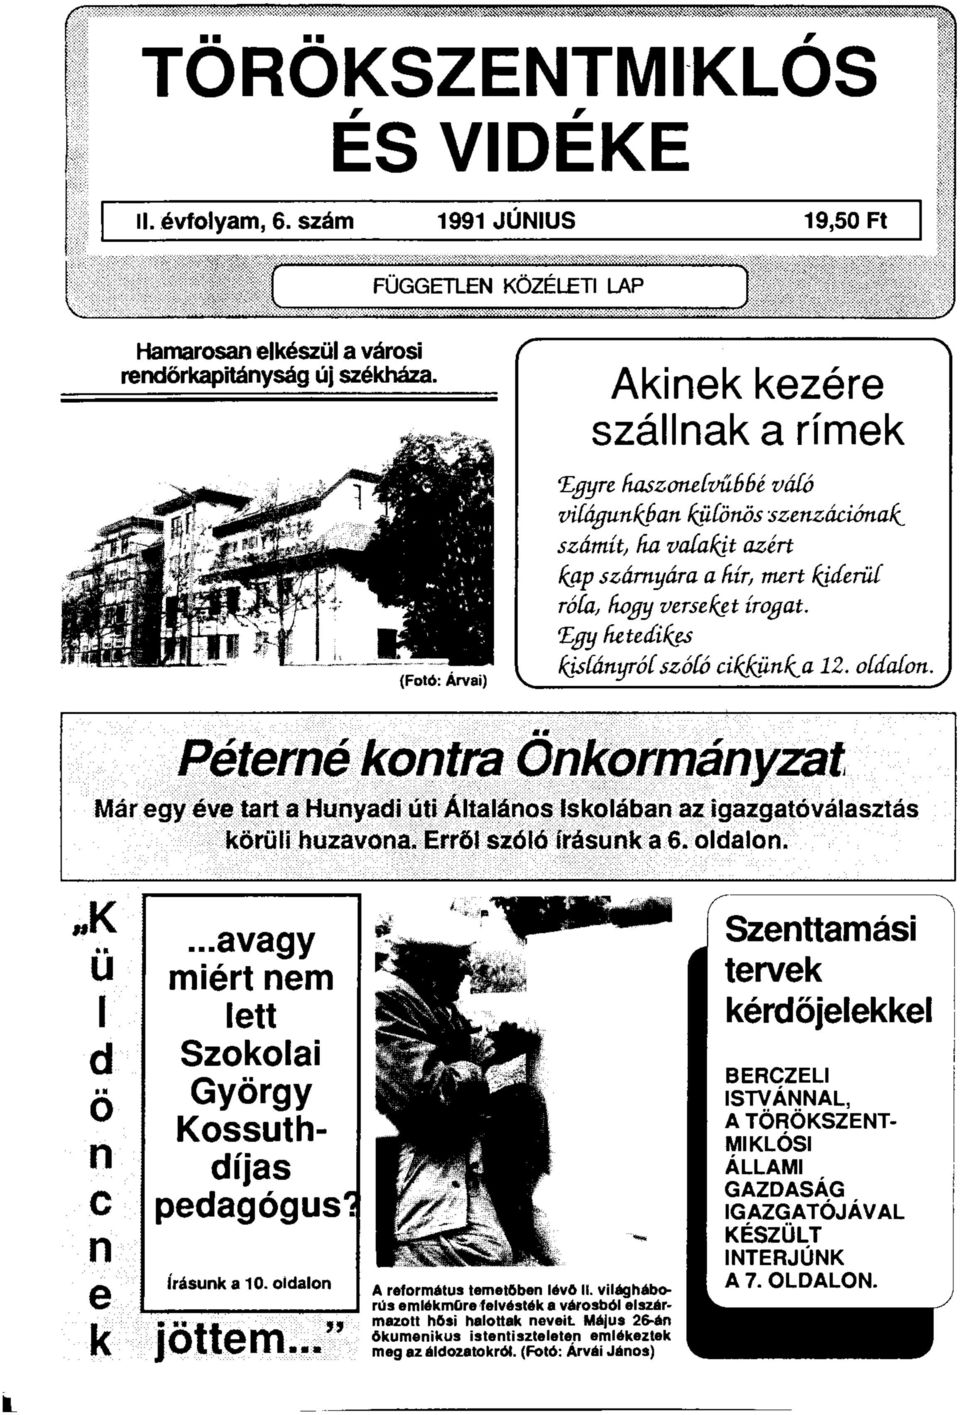 TOROKSZENTMIKLOS ÉS VIDÉKE - PDF Free Download